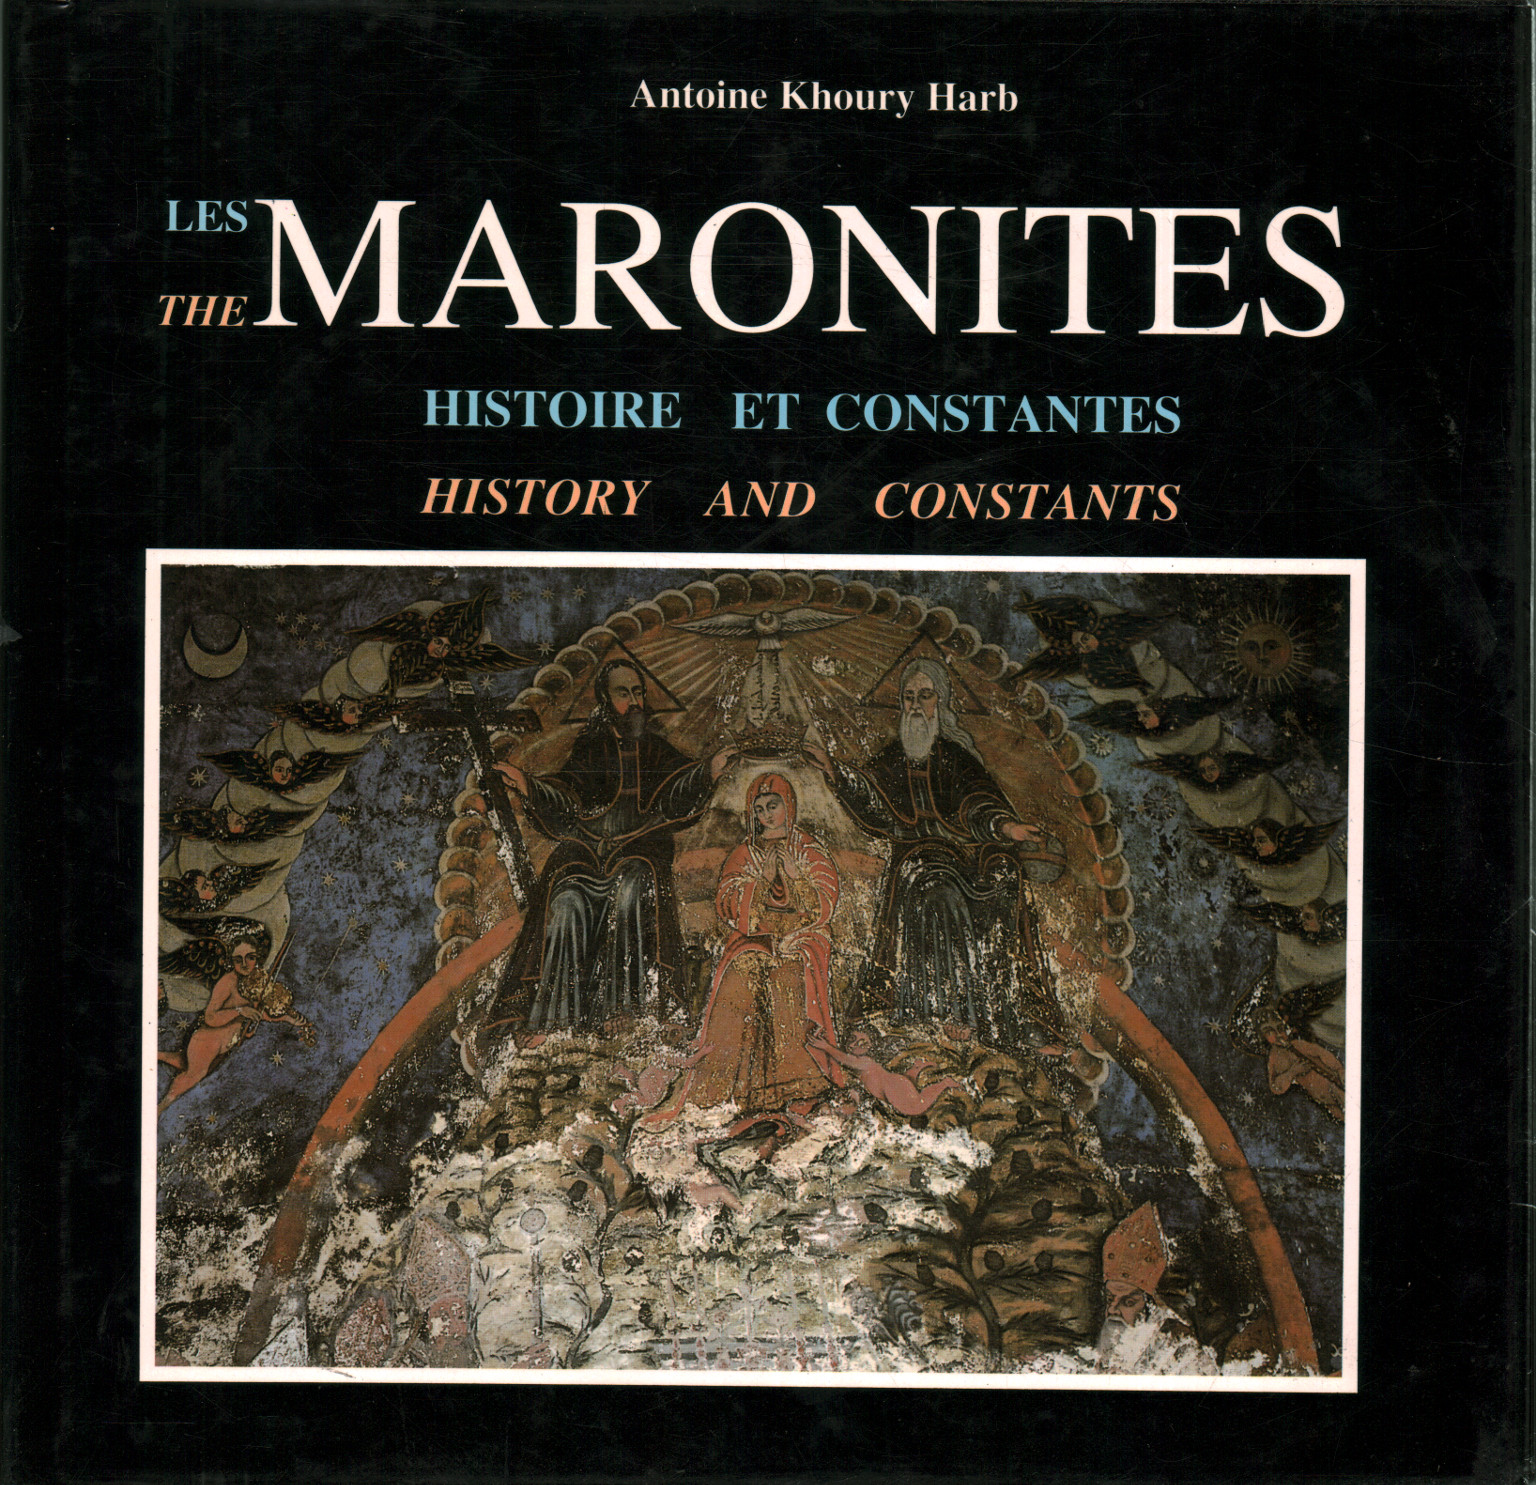 Les Maronites - Histoire et constantes, Antoine Khoury Harb